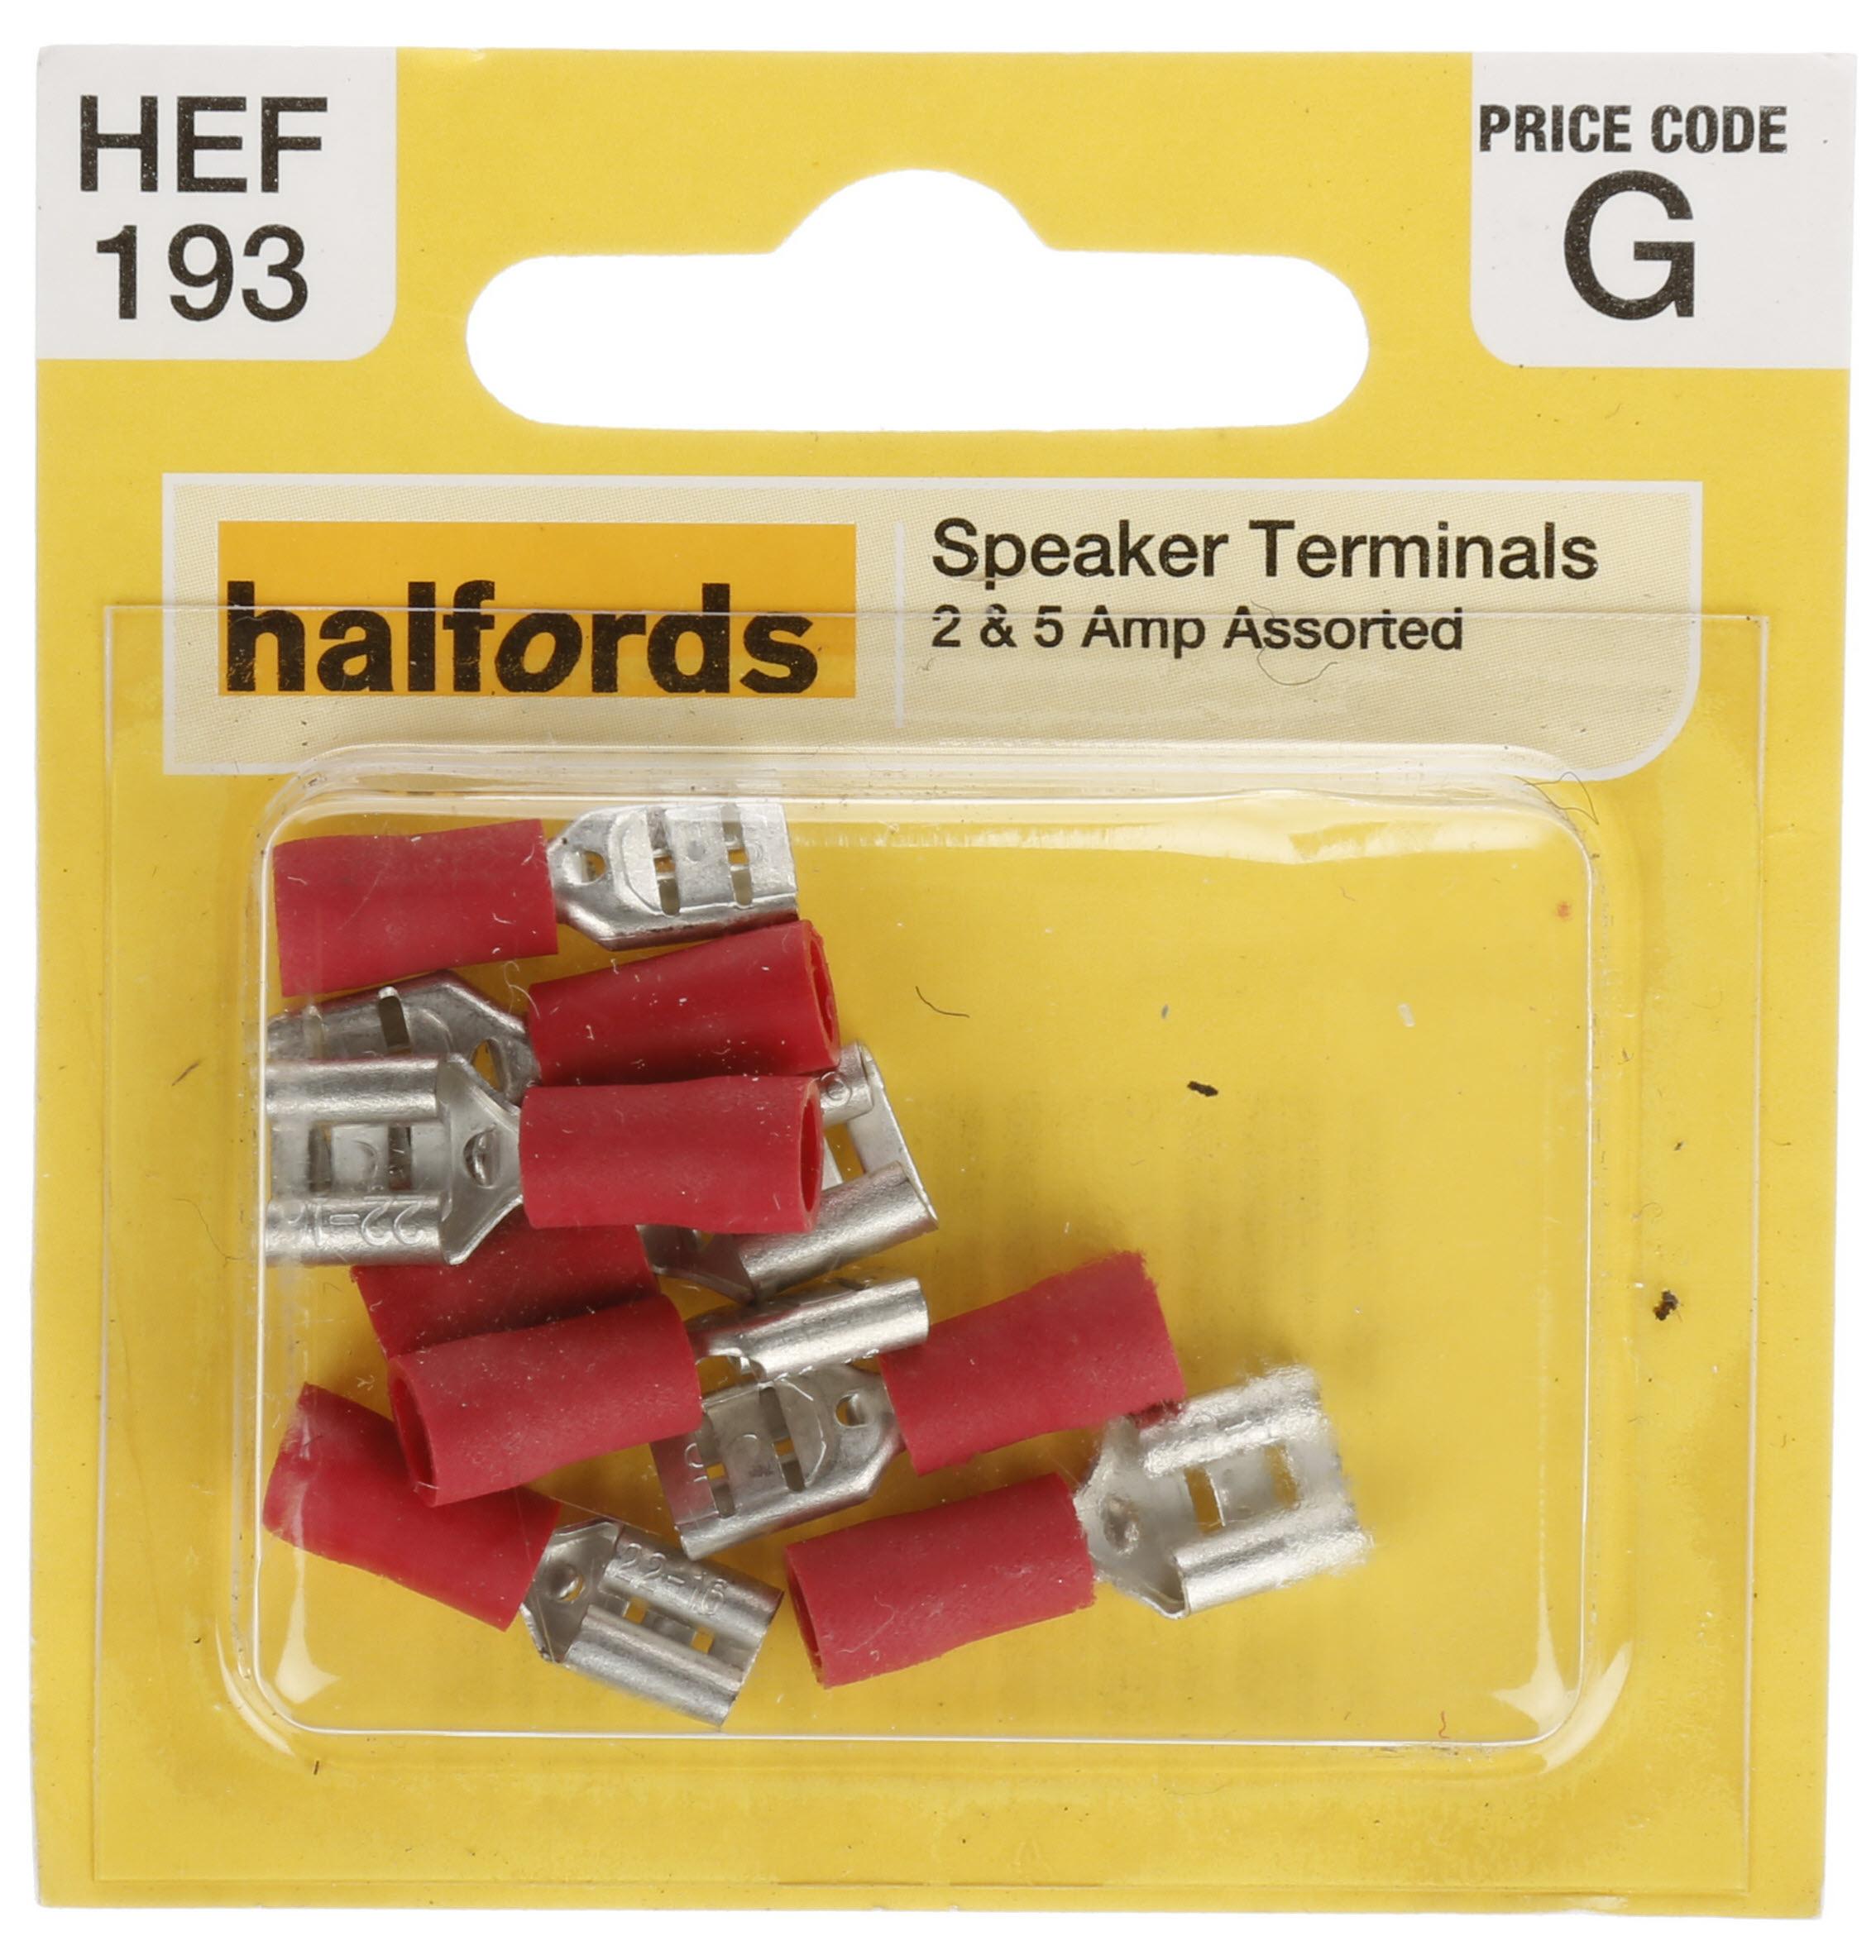 Halfords Assorted 2 & 5 Amp Speaker Terminals (Hef193)